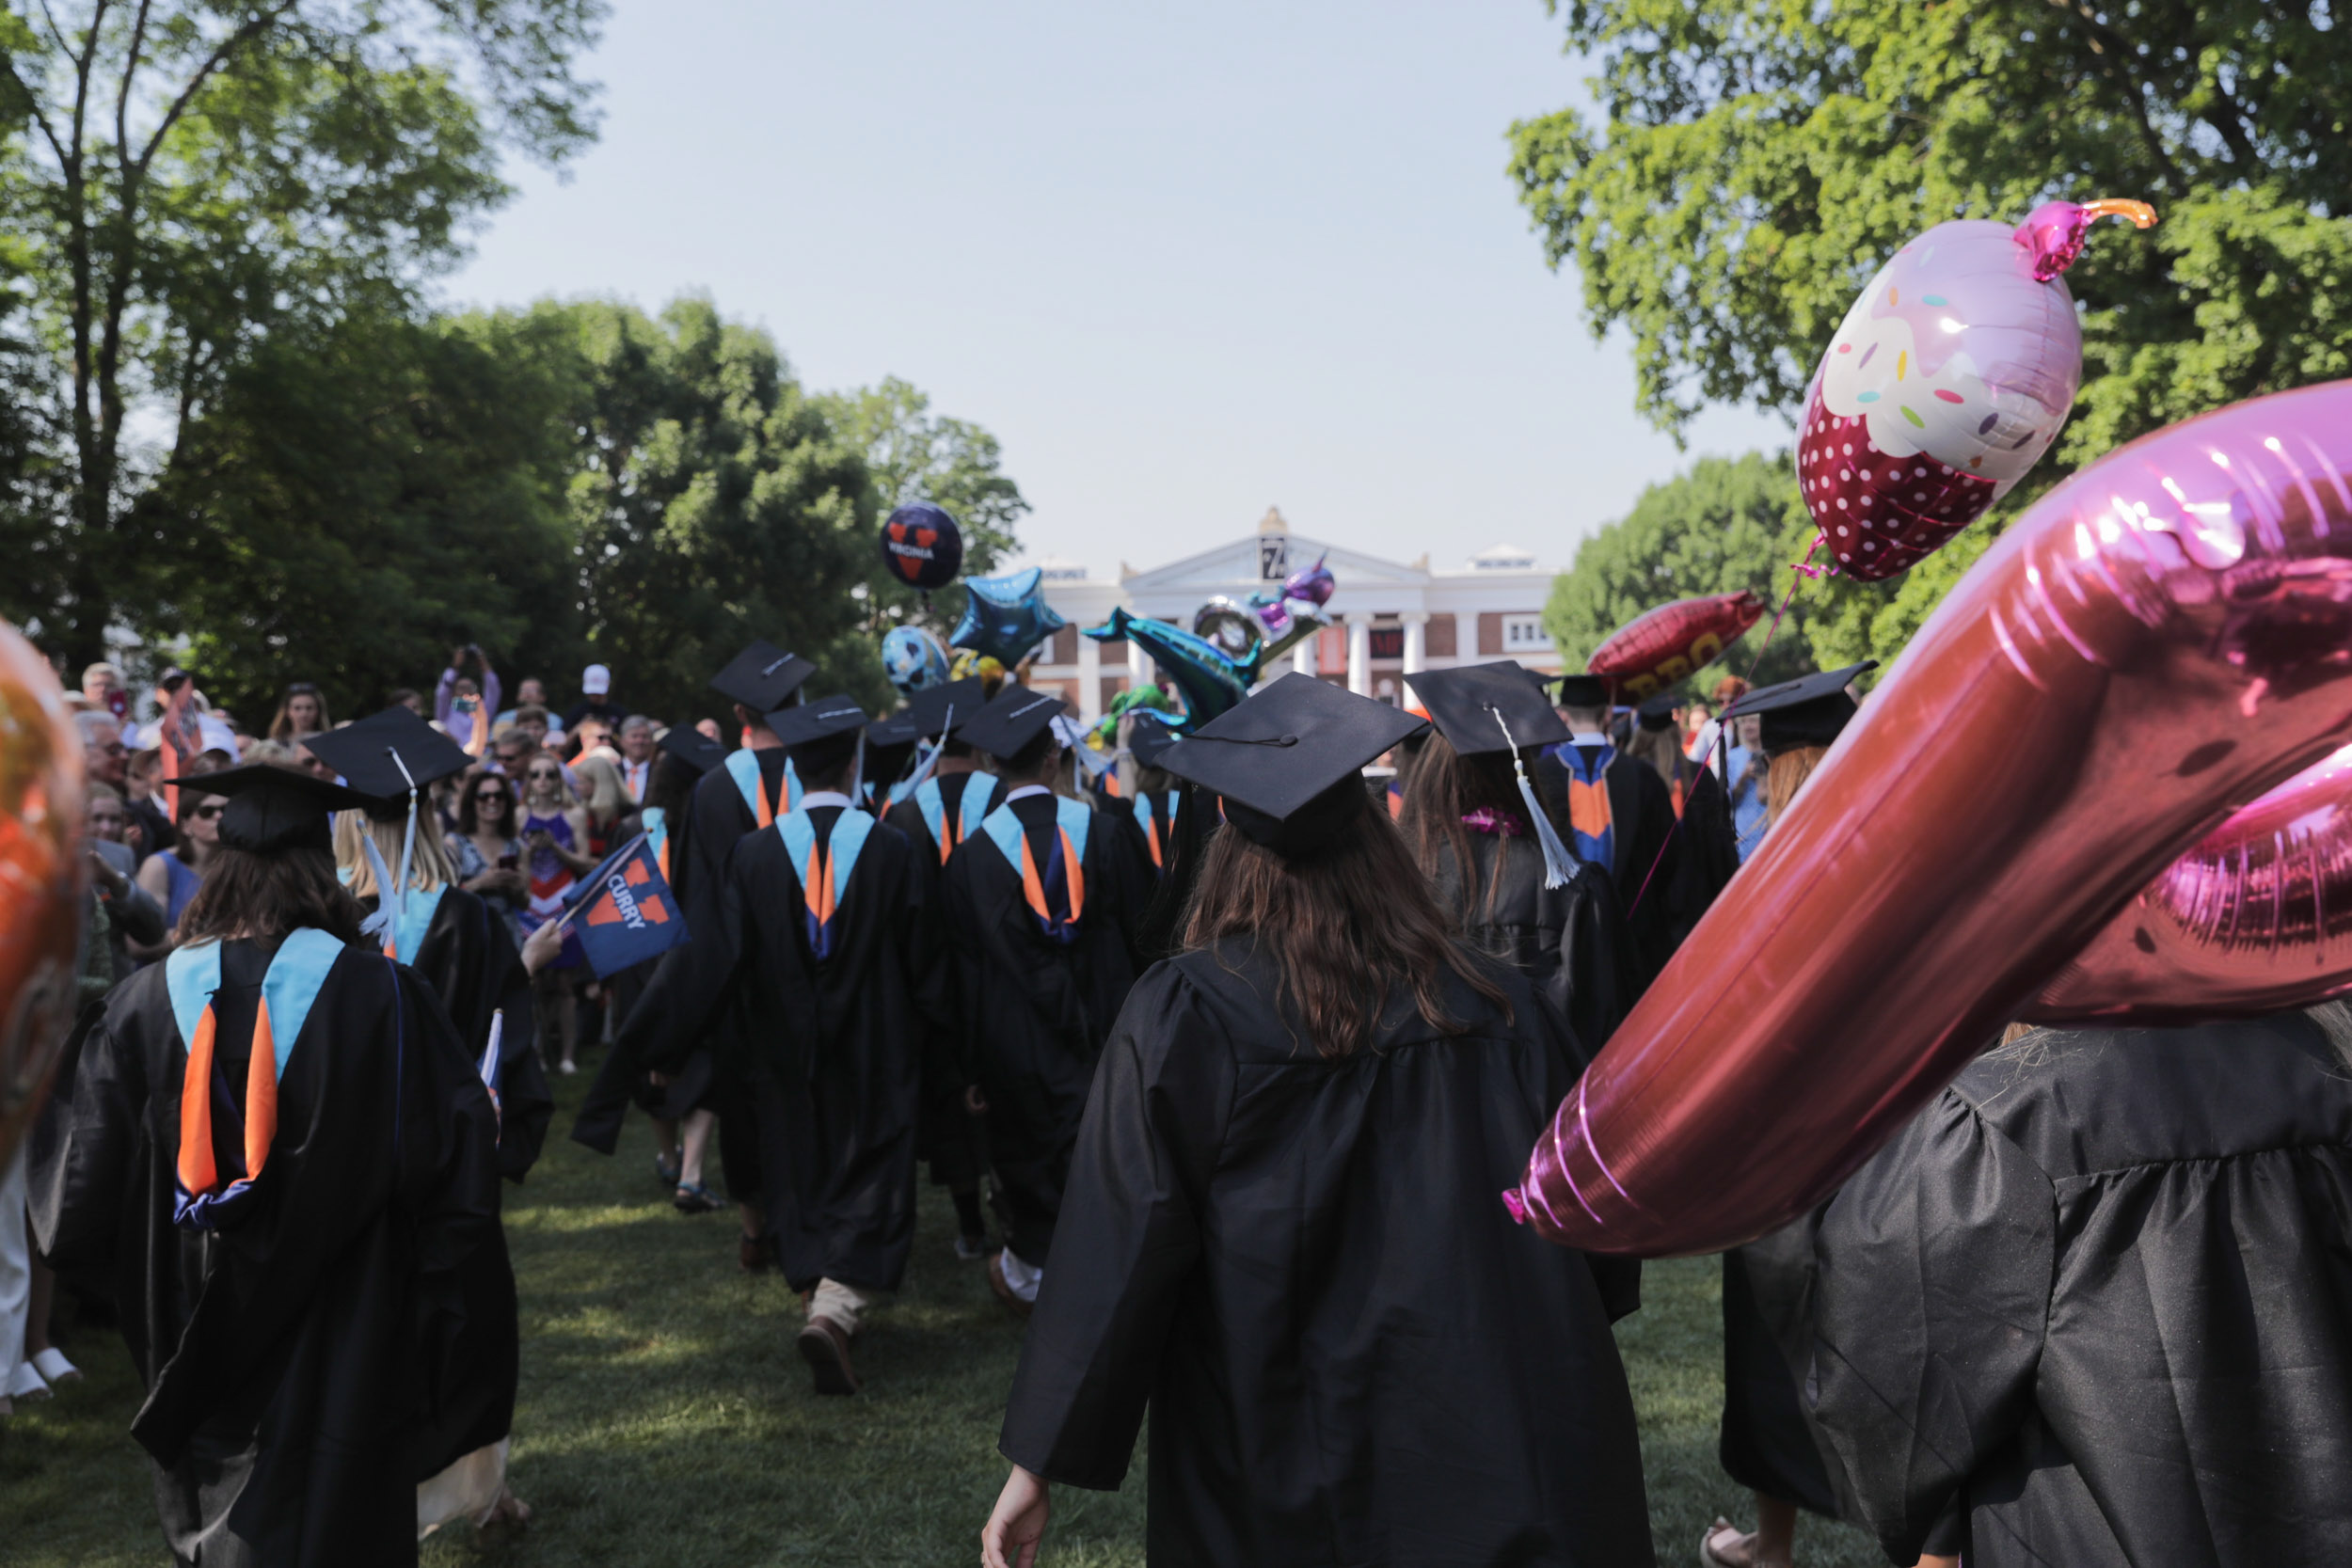 Graduates walking the lawn to their seats